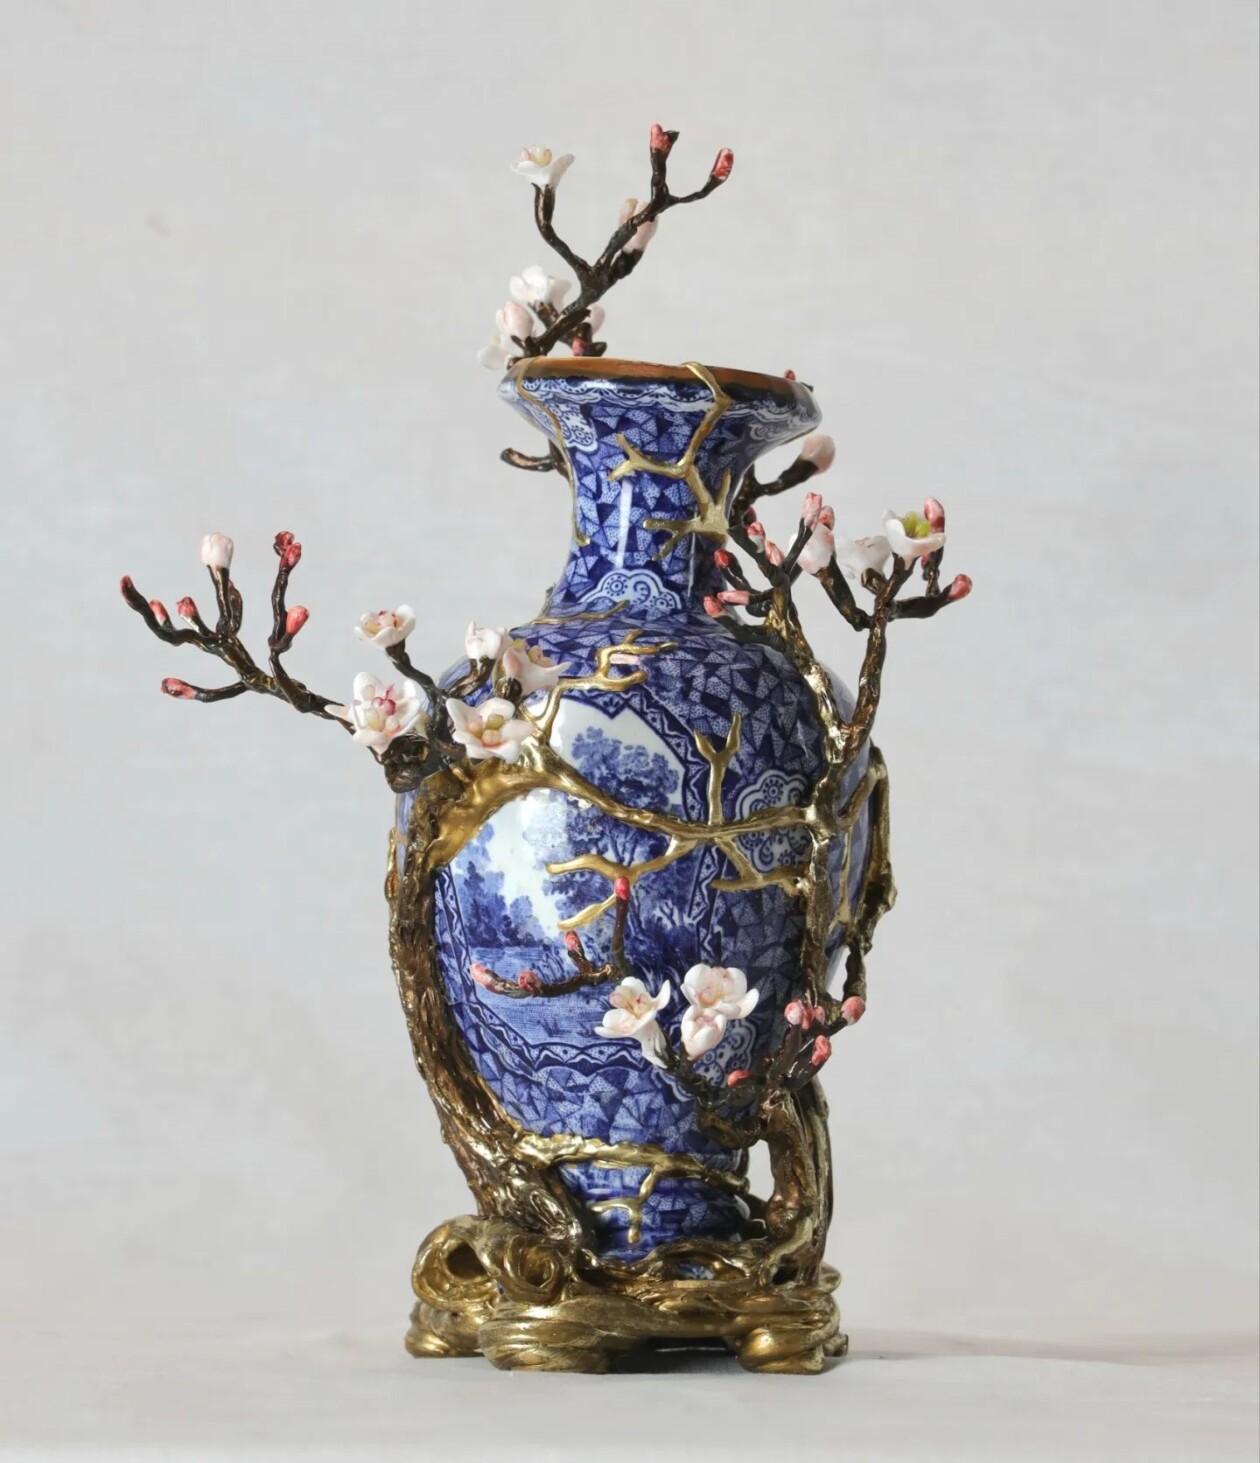 Bonsai Tree Sculptures Beautifully Bursting Through Broken Porcelain Vessels In Patrick Bergsma's Artworks (4)